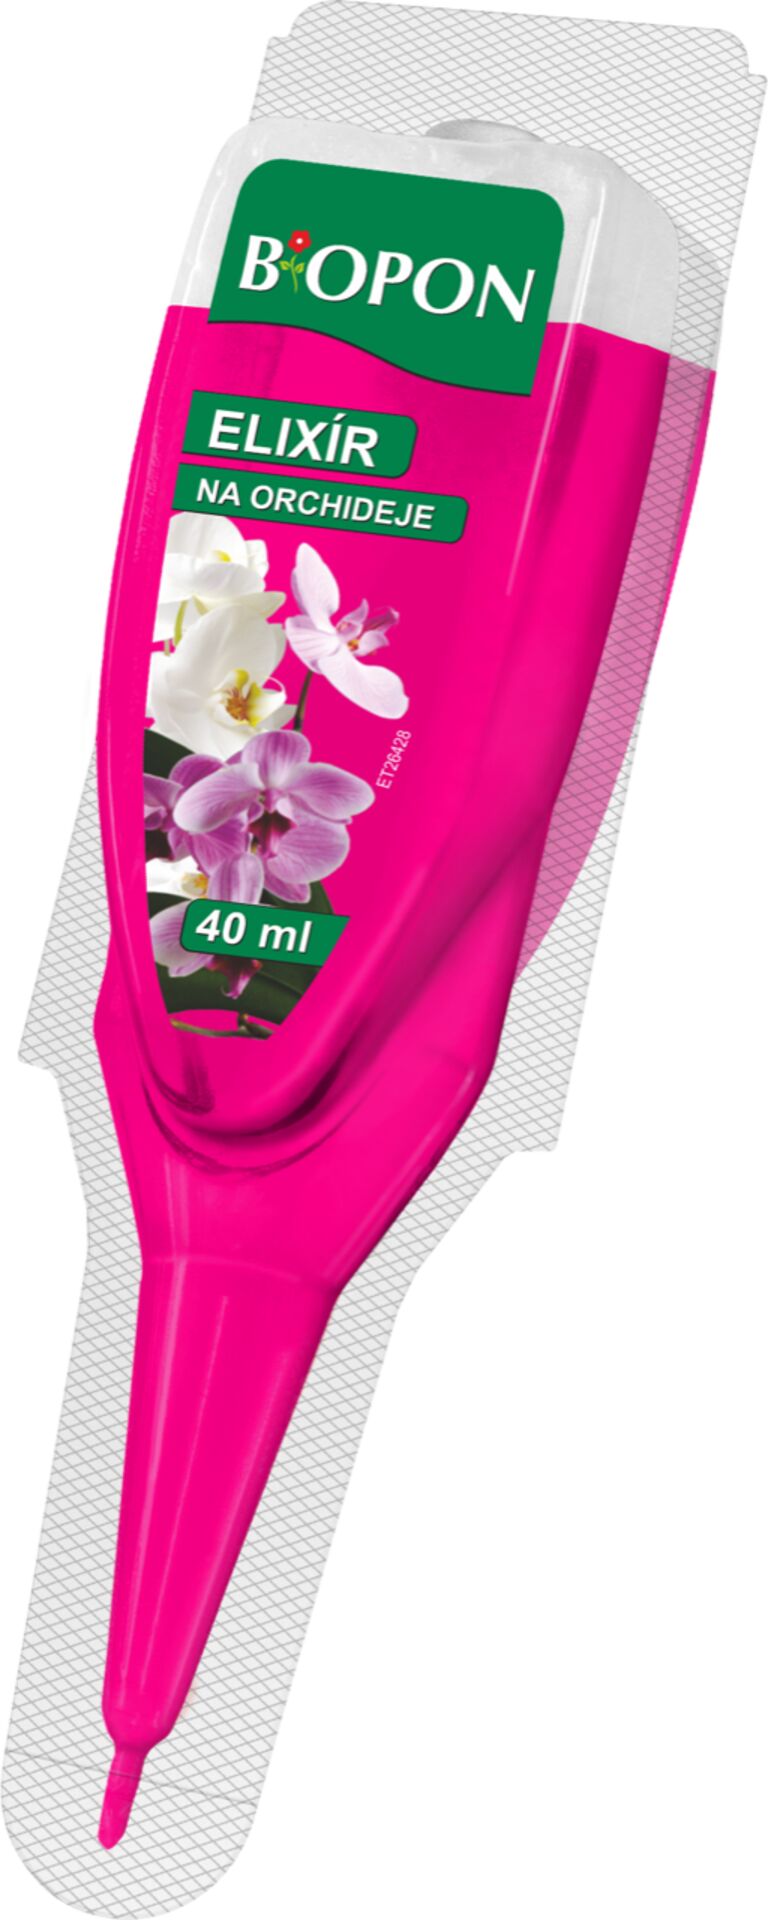 BOPON Elixír - na orchideje 35 ml - df2821a3 70c7 4ac6 8393 b4776c1fef49